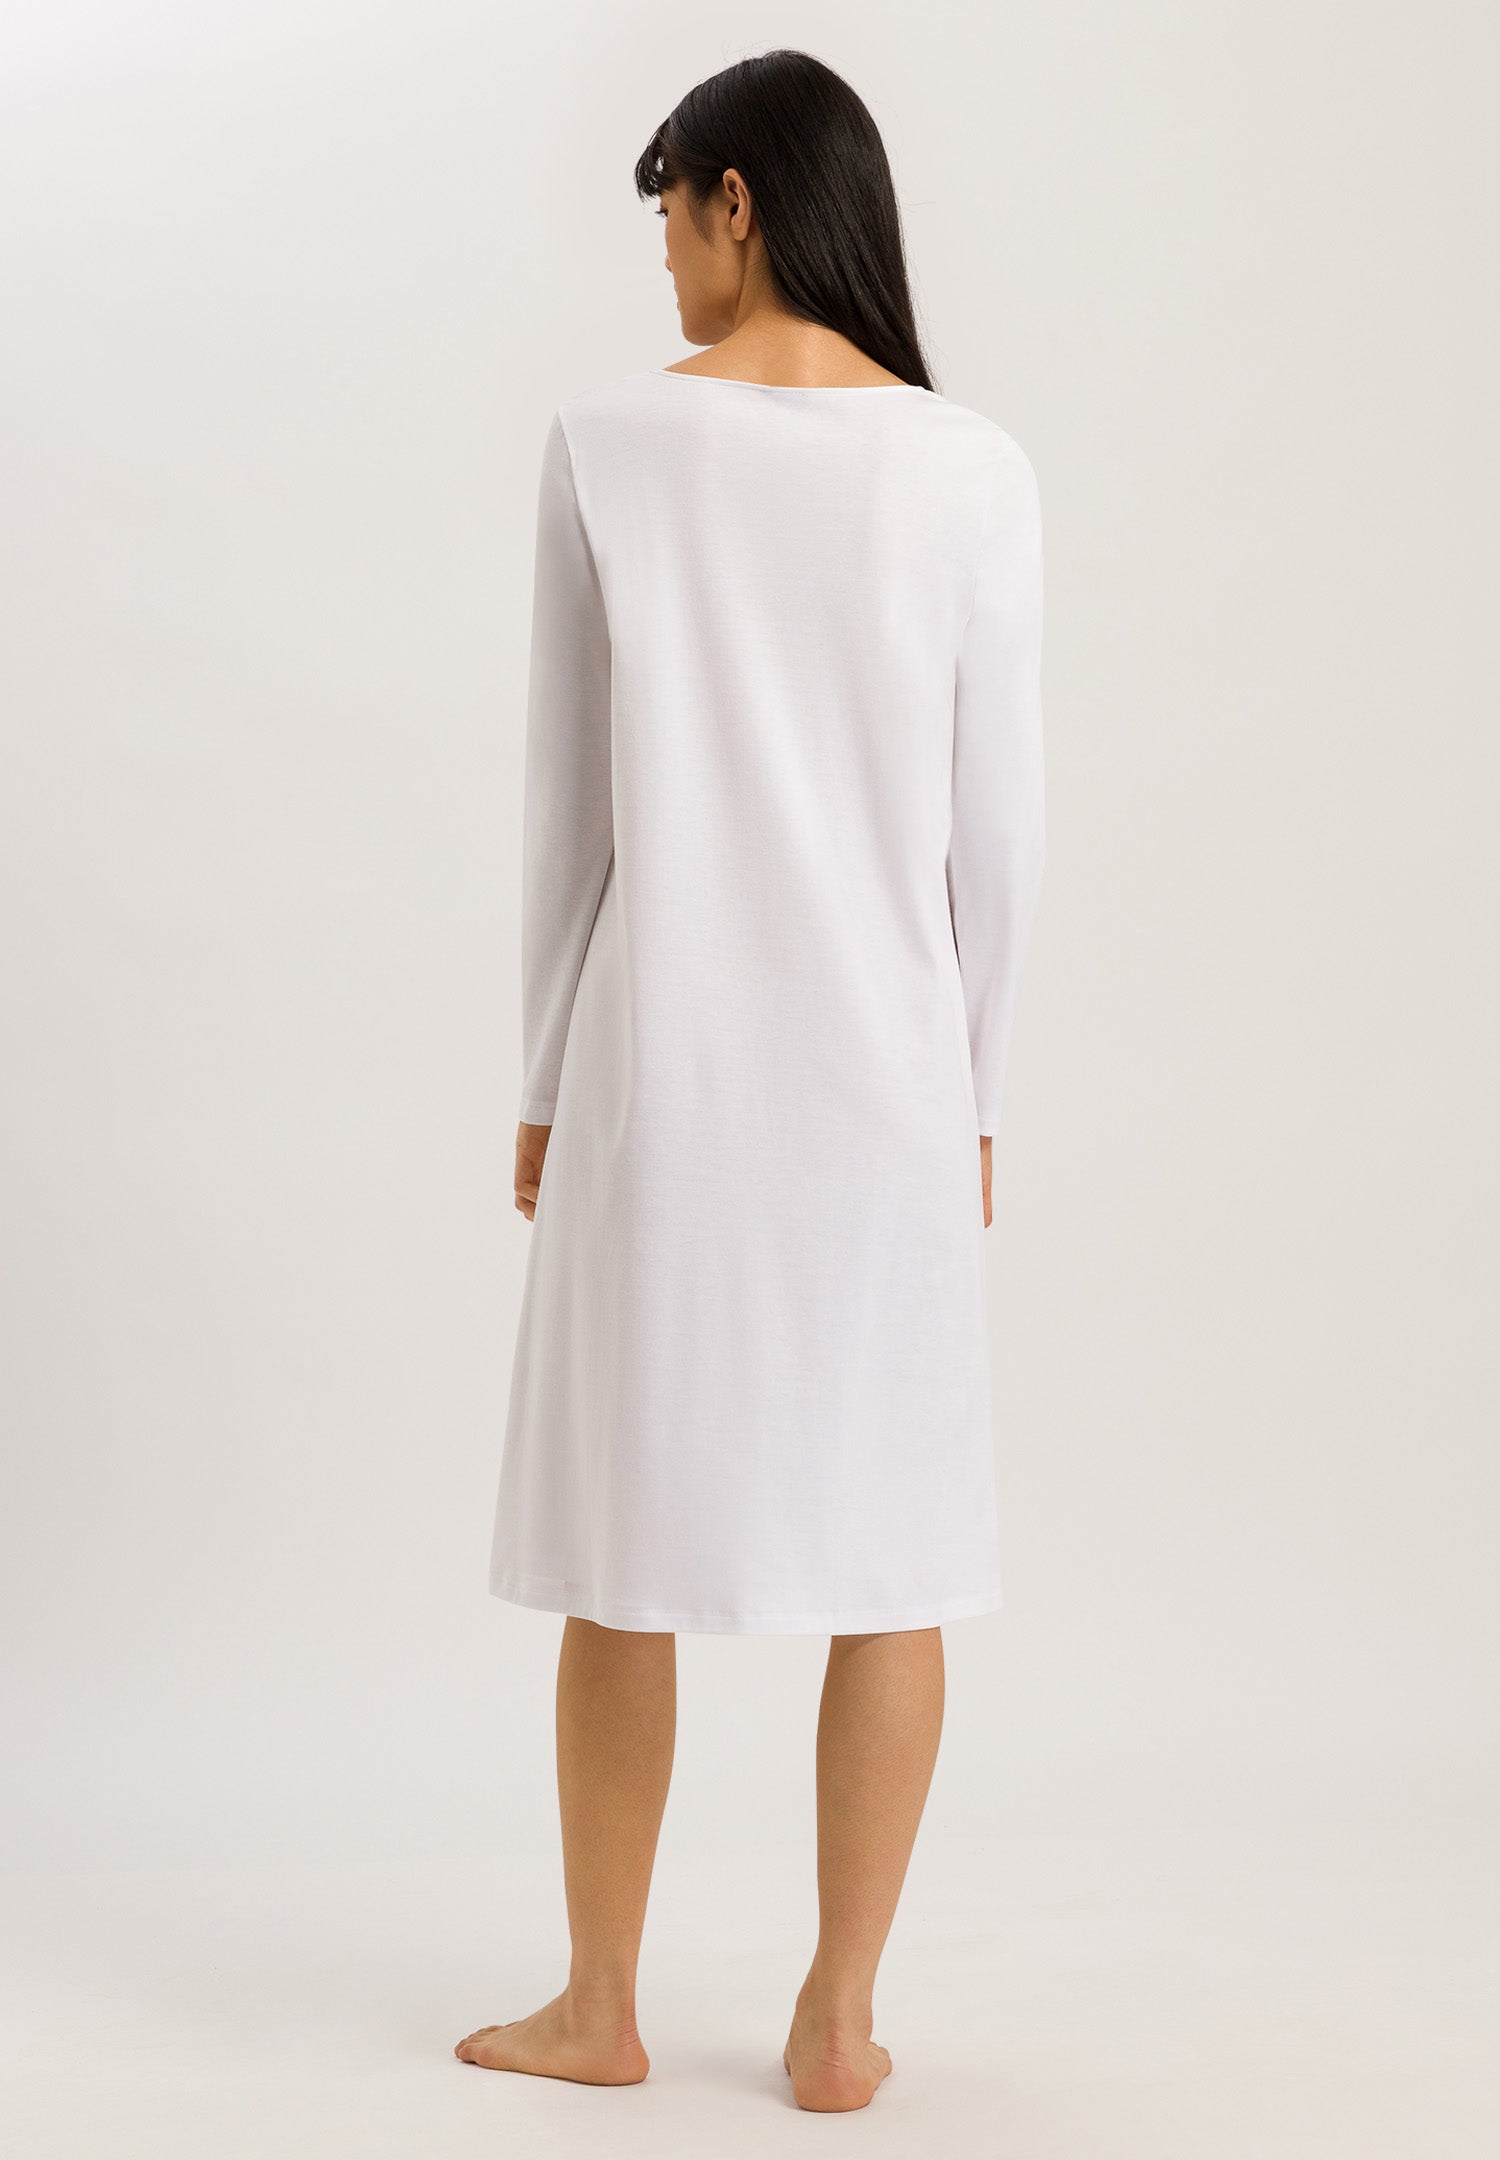 74944 L/Slv Nightgown - 101 White